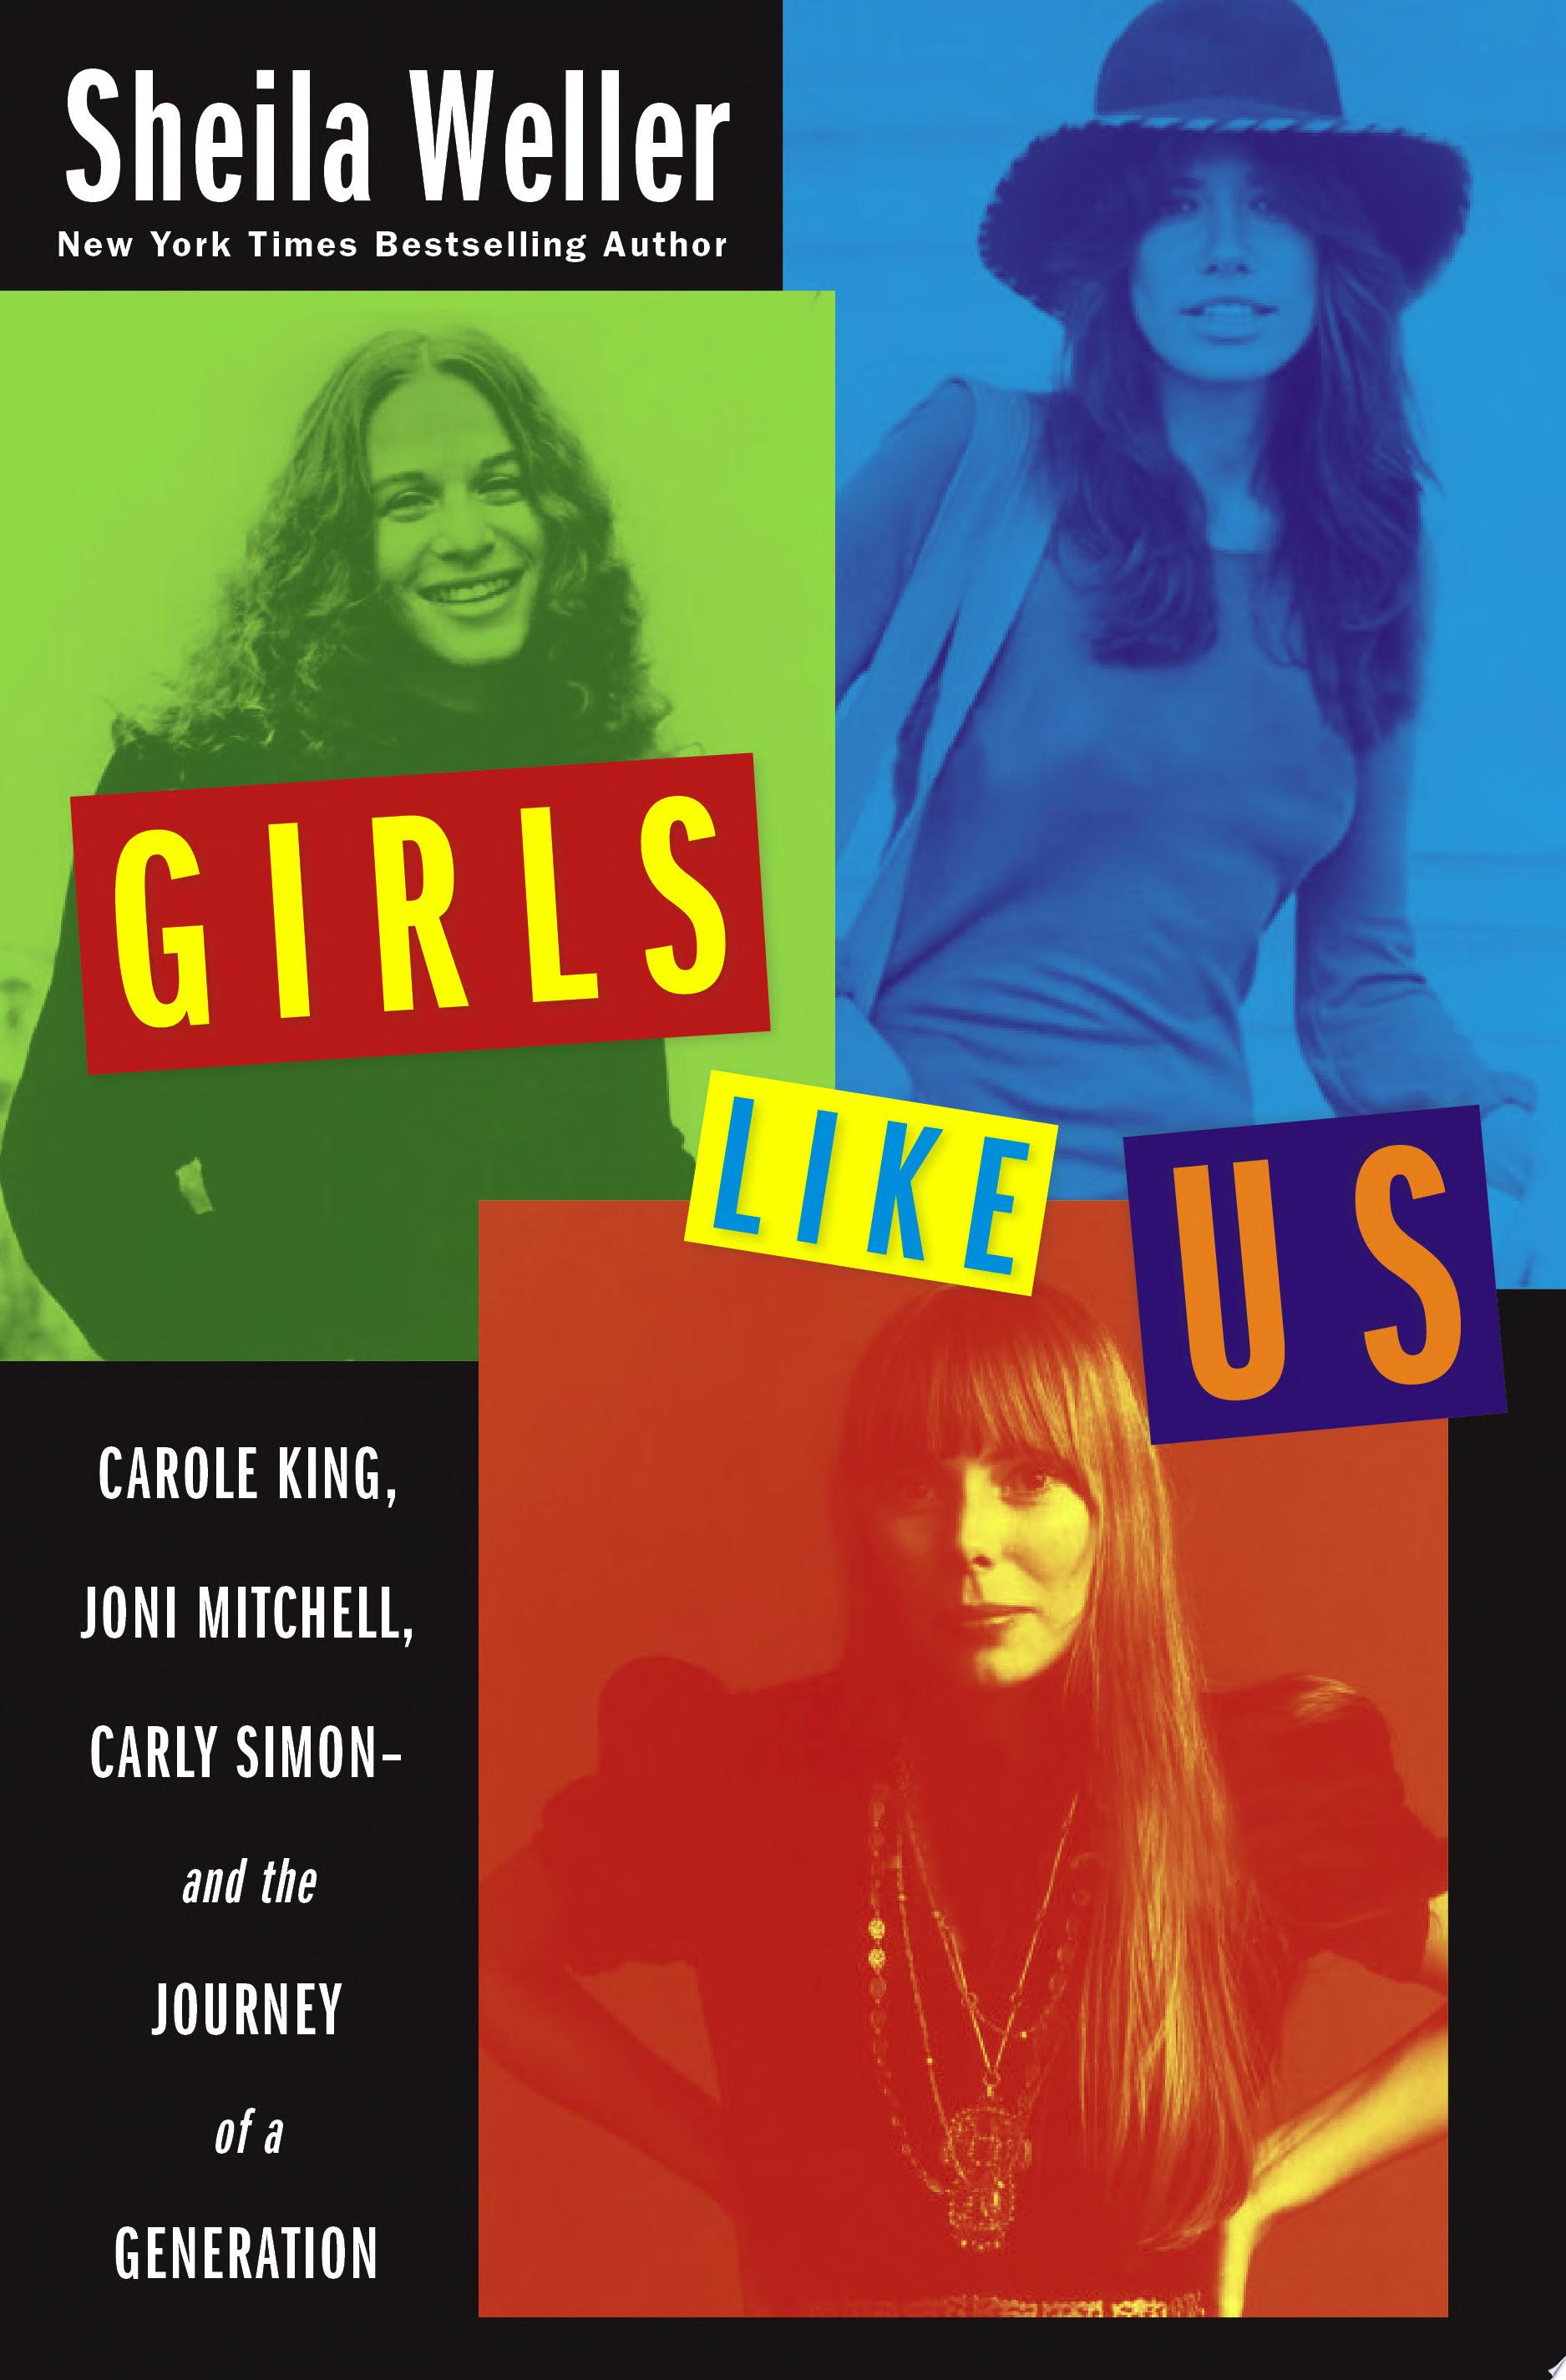 Image for "Girls Like Us"